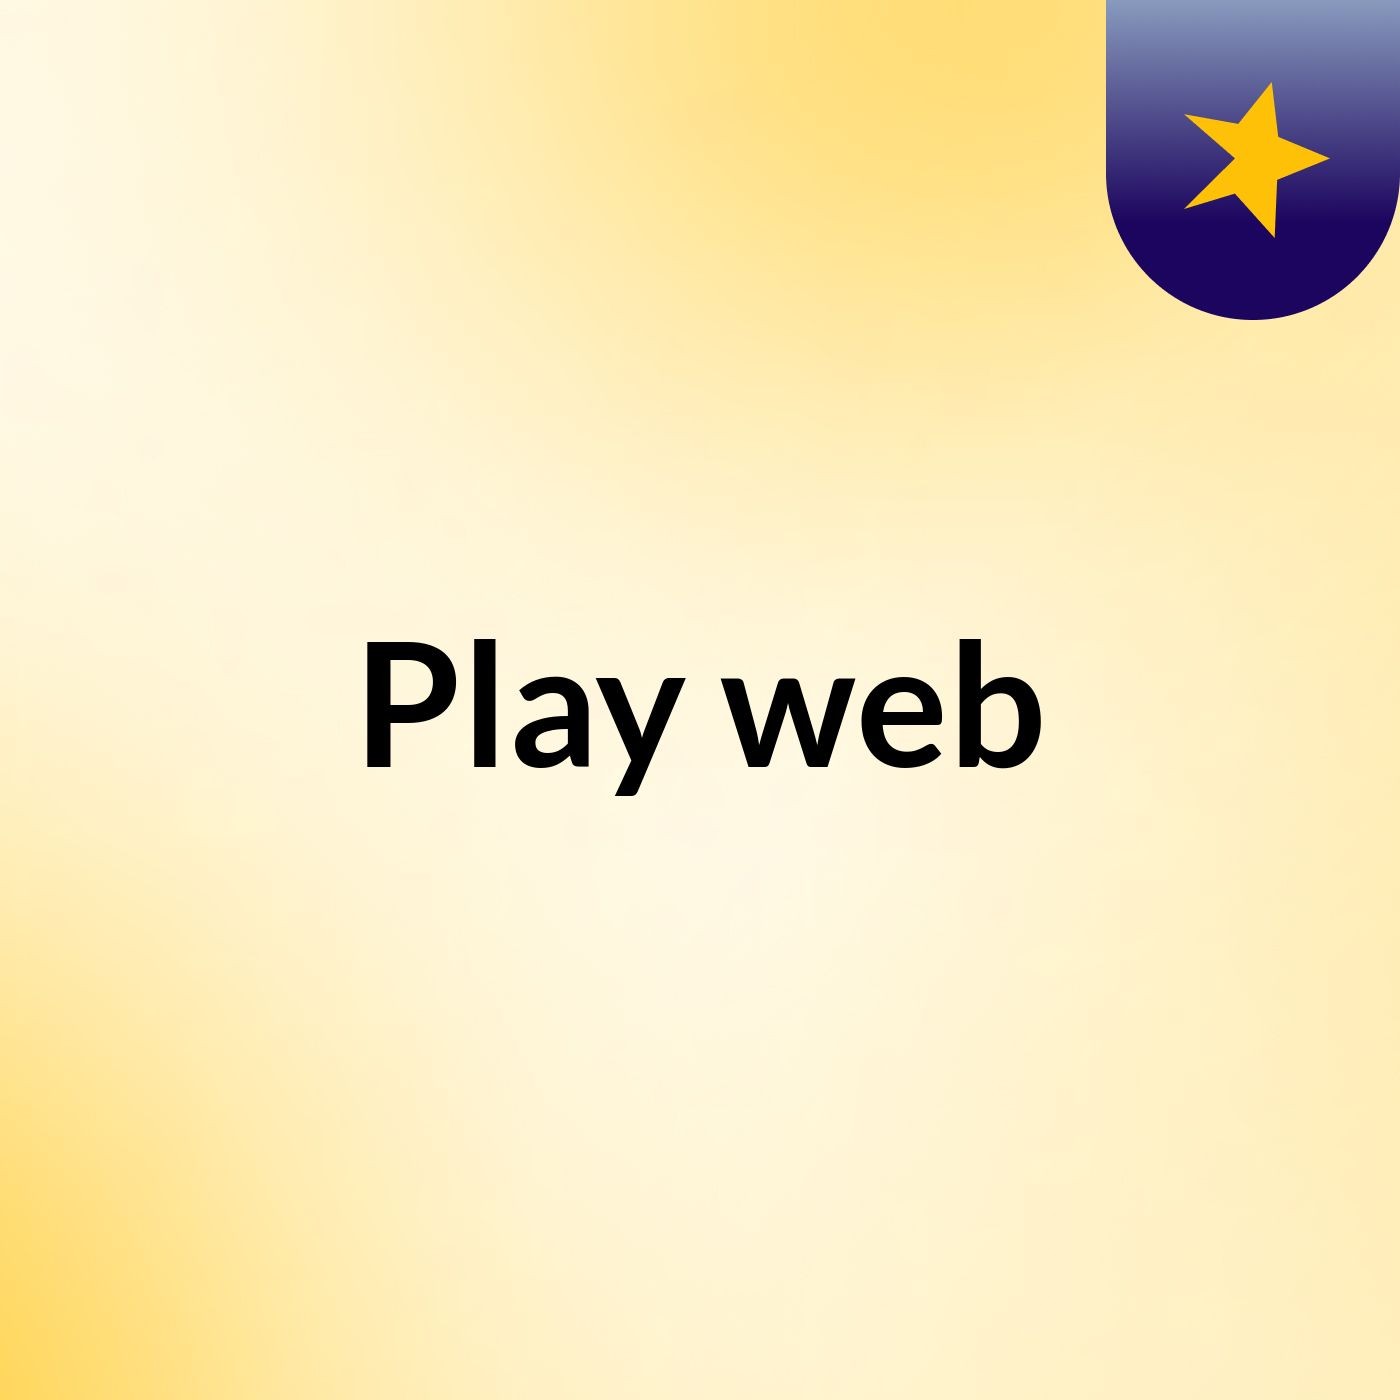 Play web